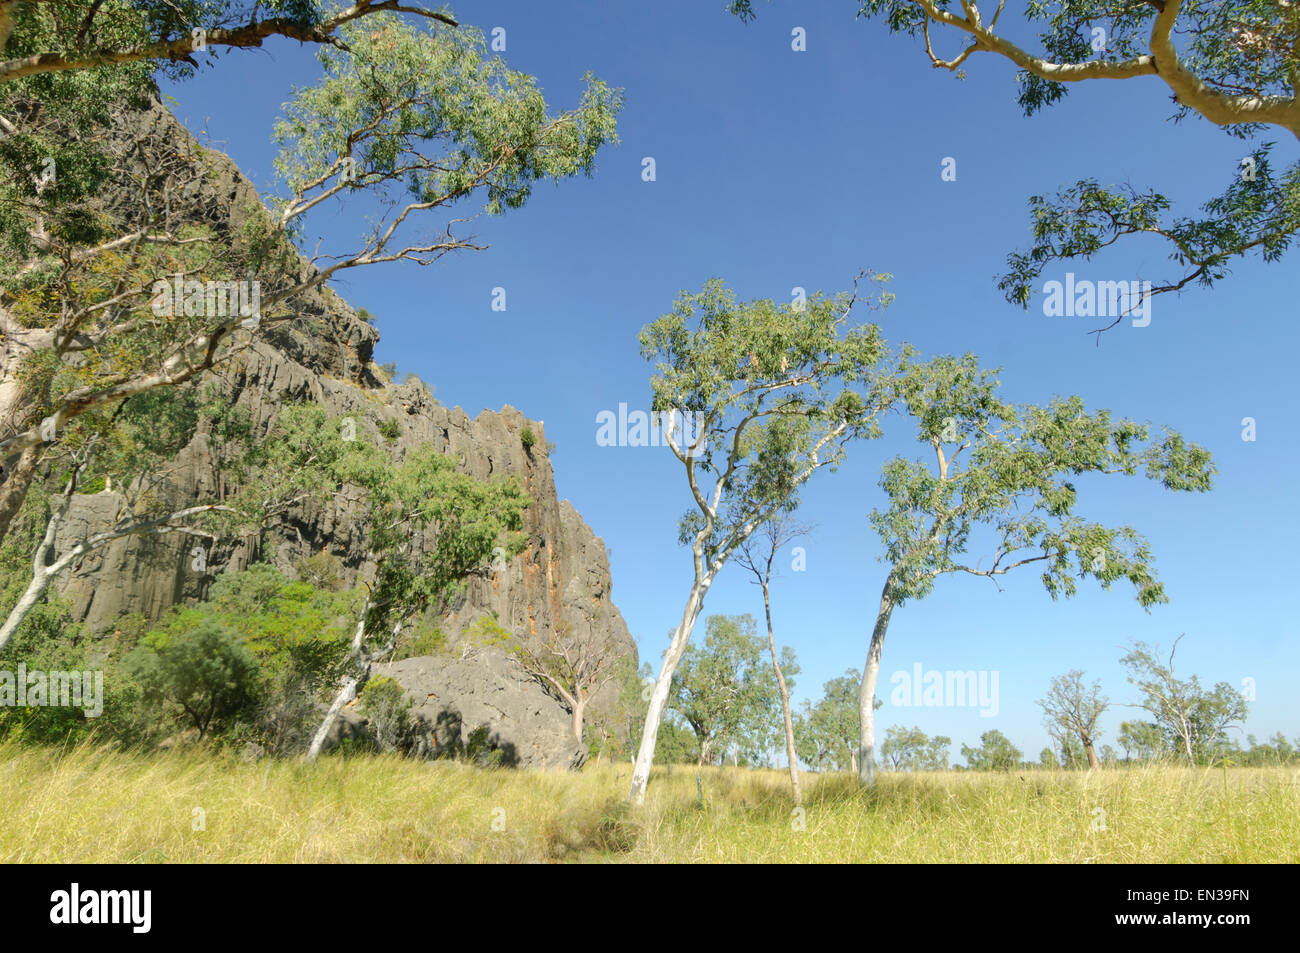 Savannah, Windjana Gorge, Kimberley, Australie occidentale Banque D'Images